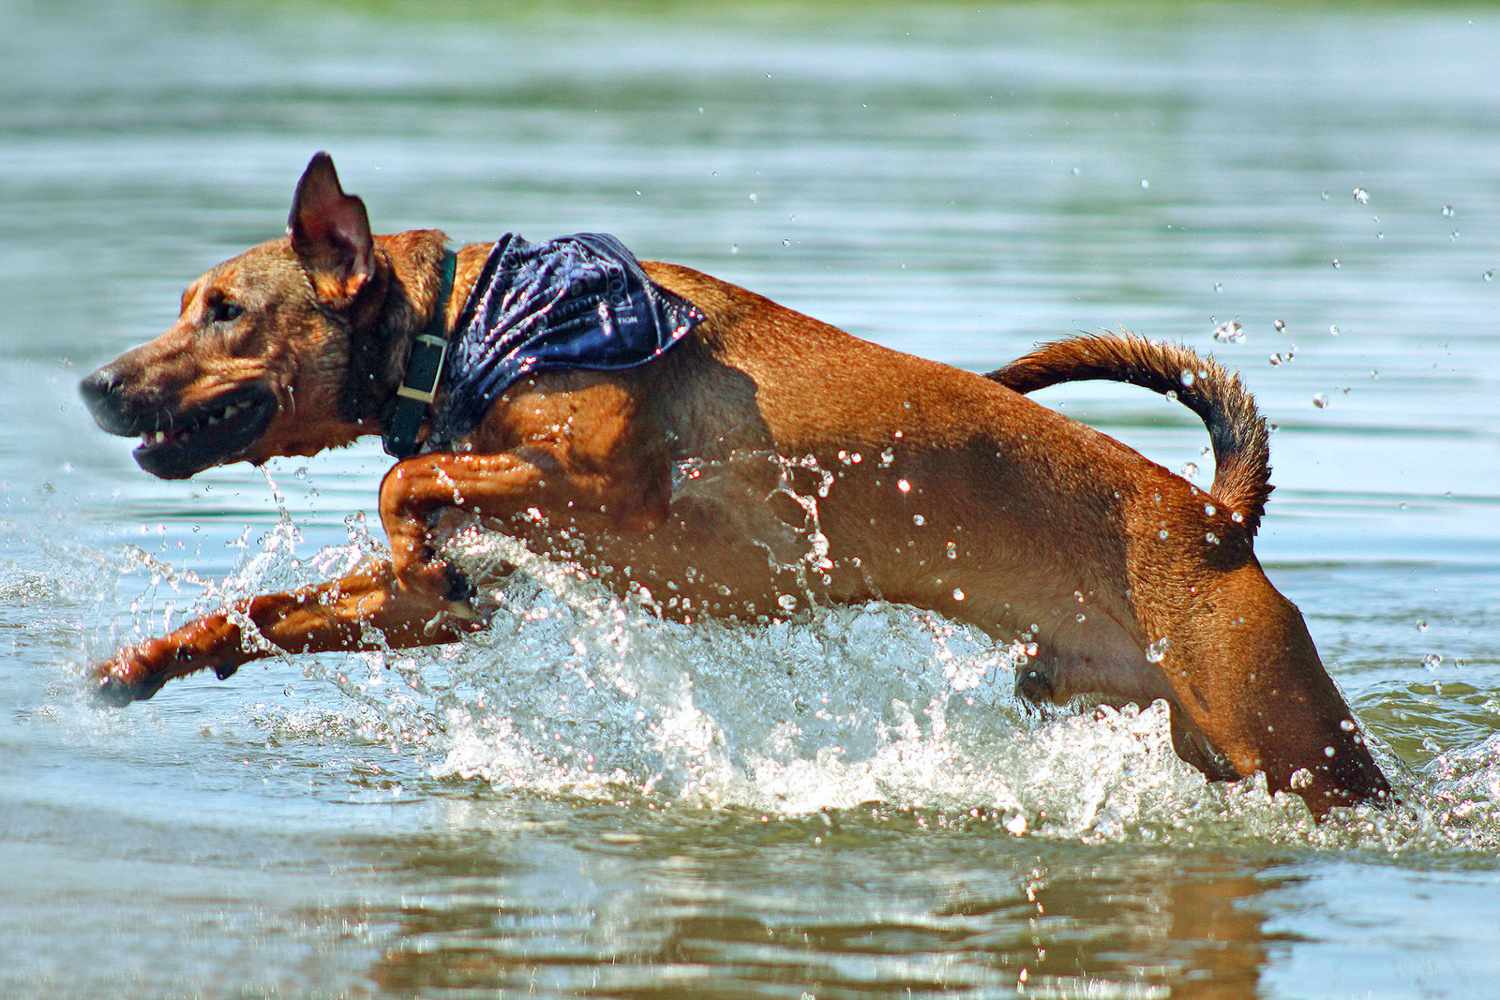 Tan mountain cur dog runs through water while wearing a blue bandana around torso